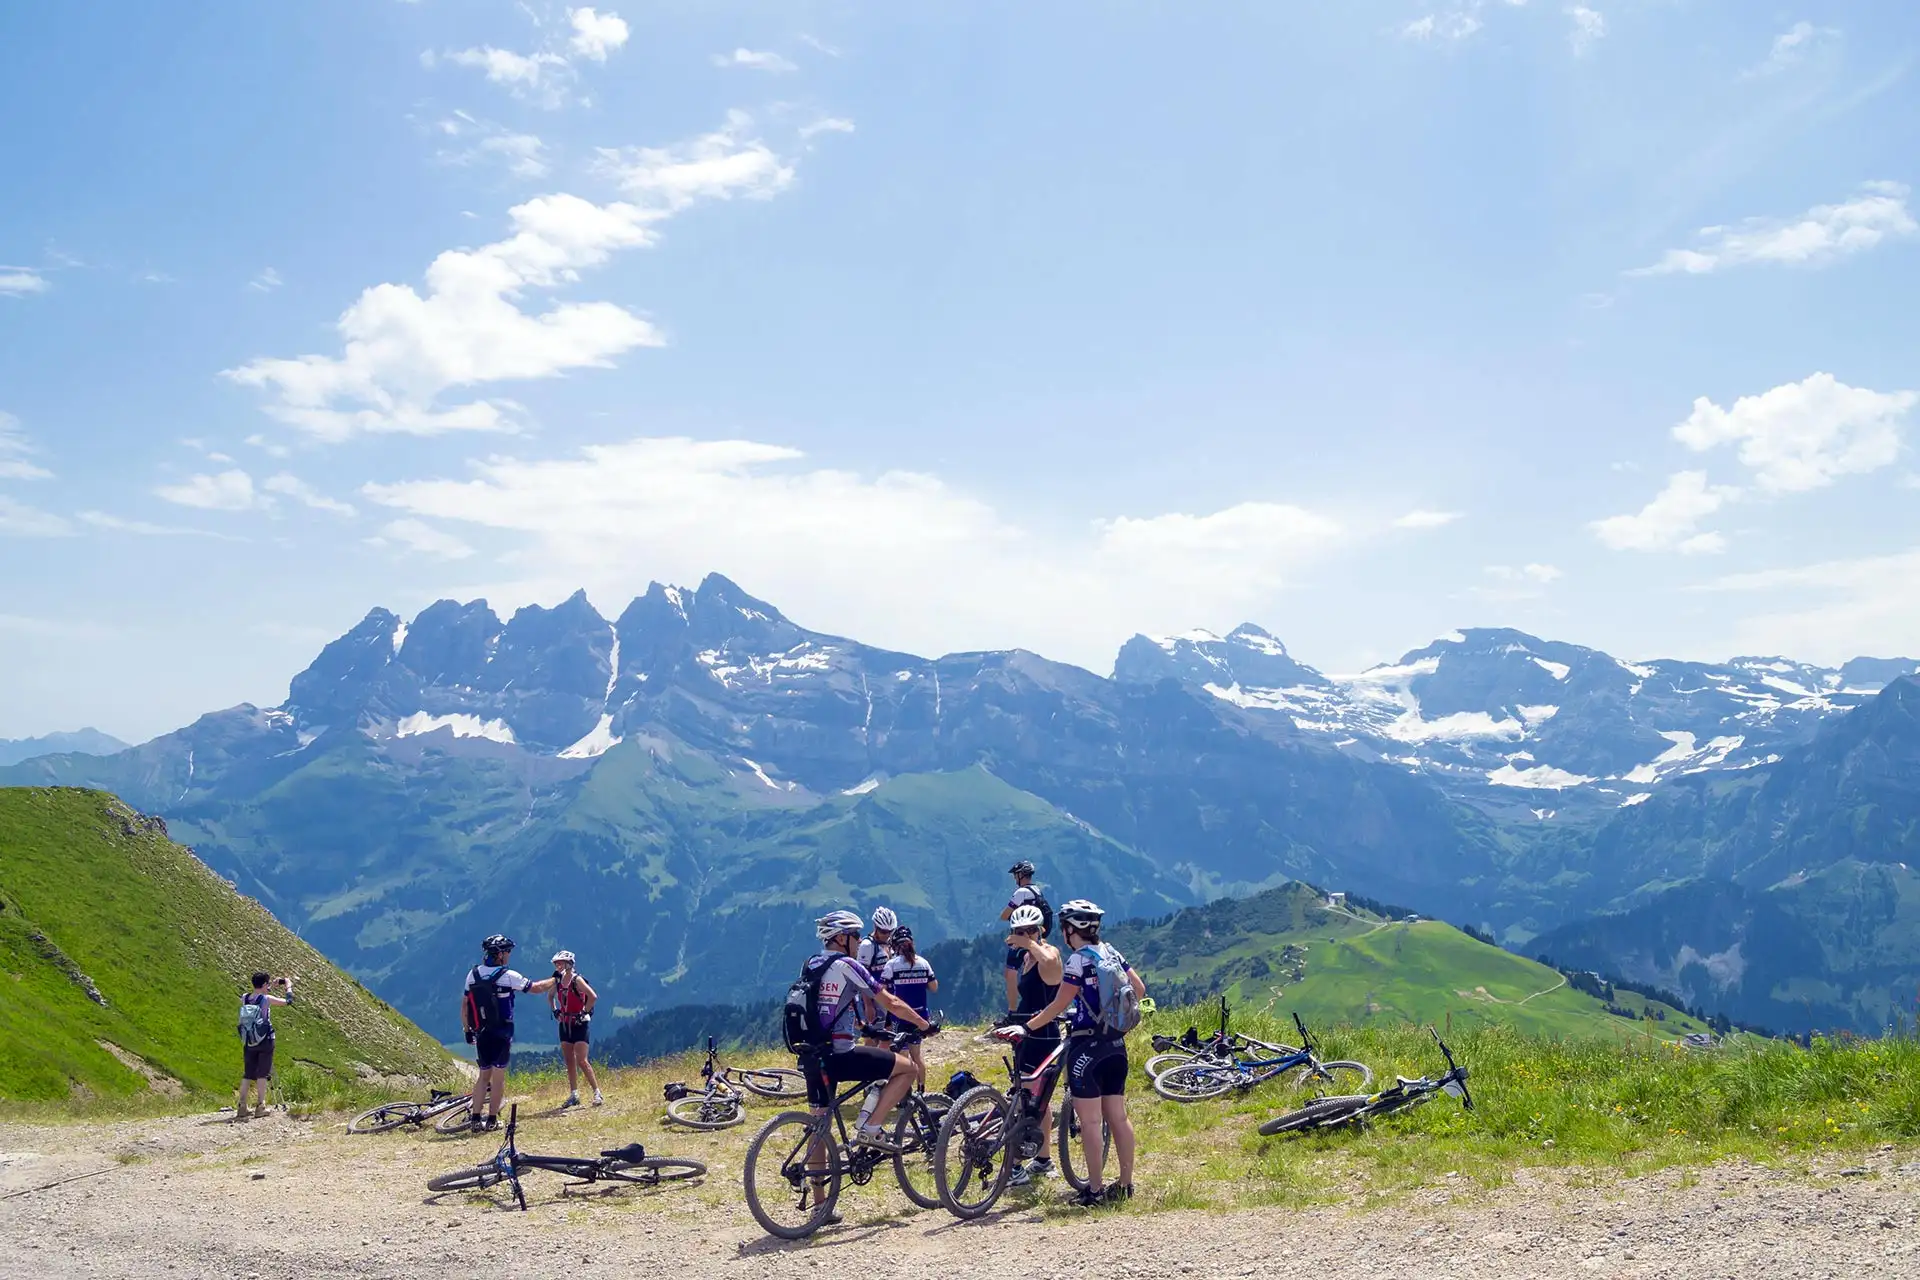 Bikers on the trail in Swiss Alps, Portes du Soleil region touristic